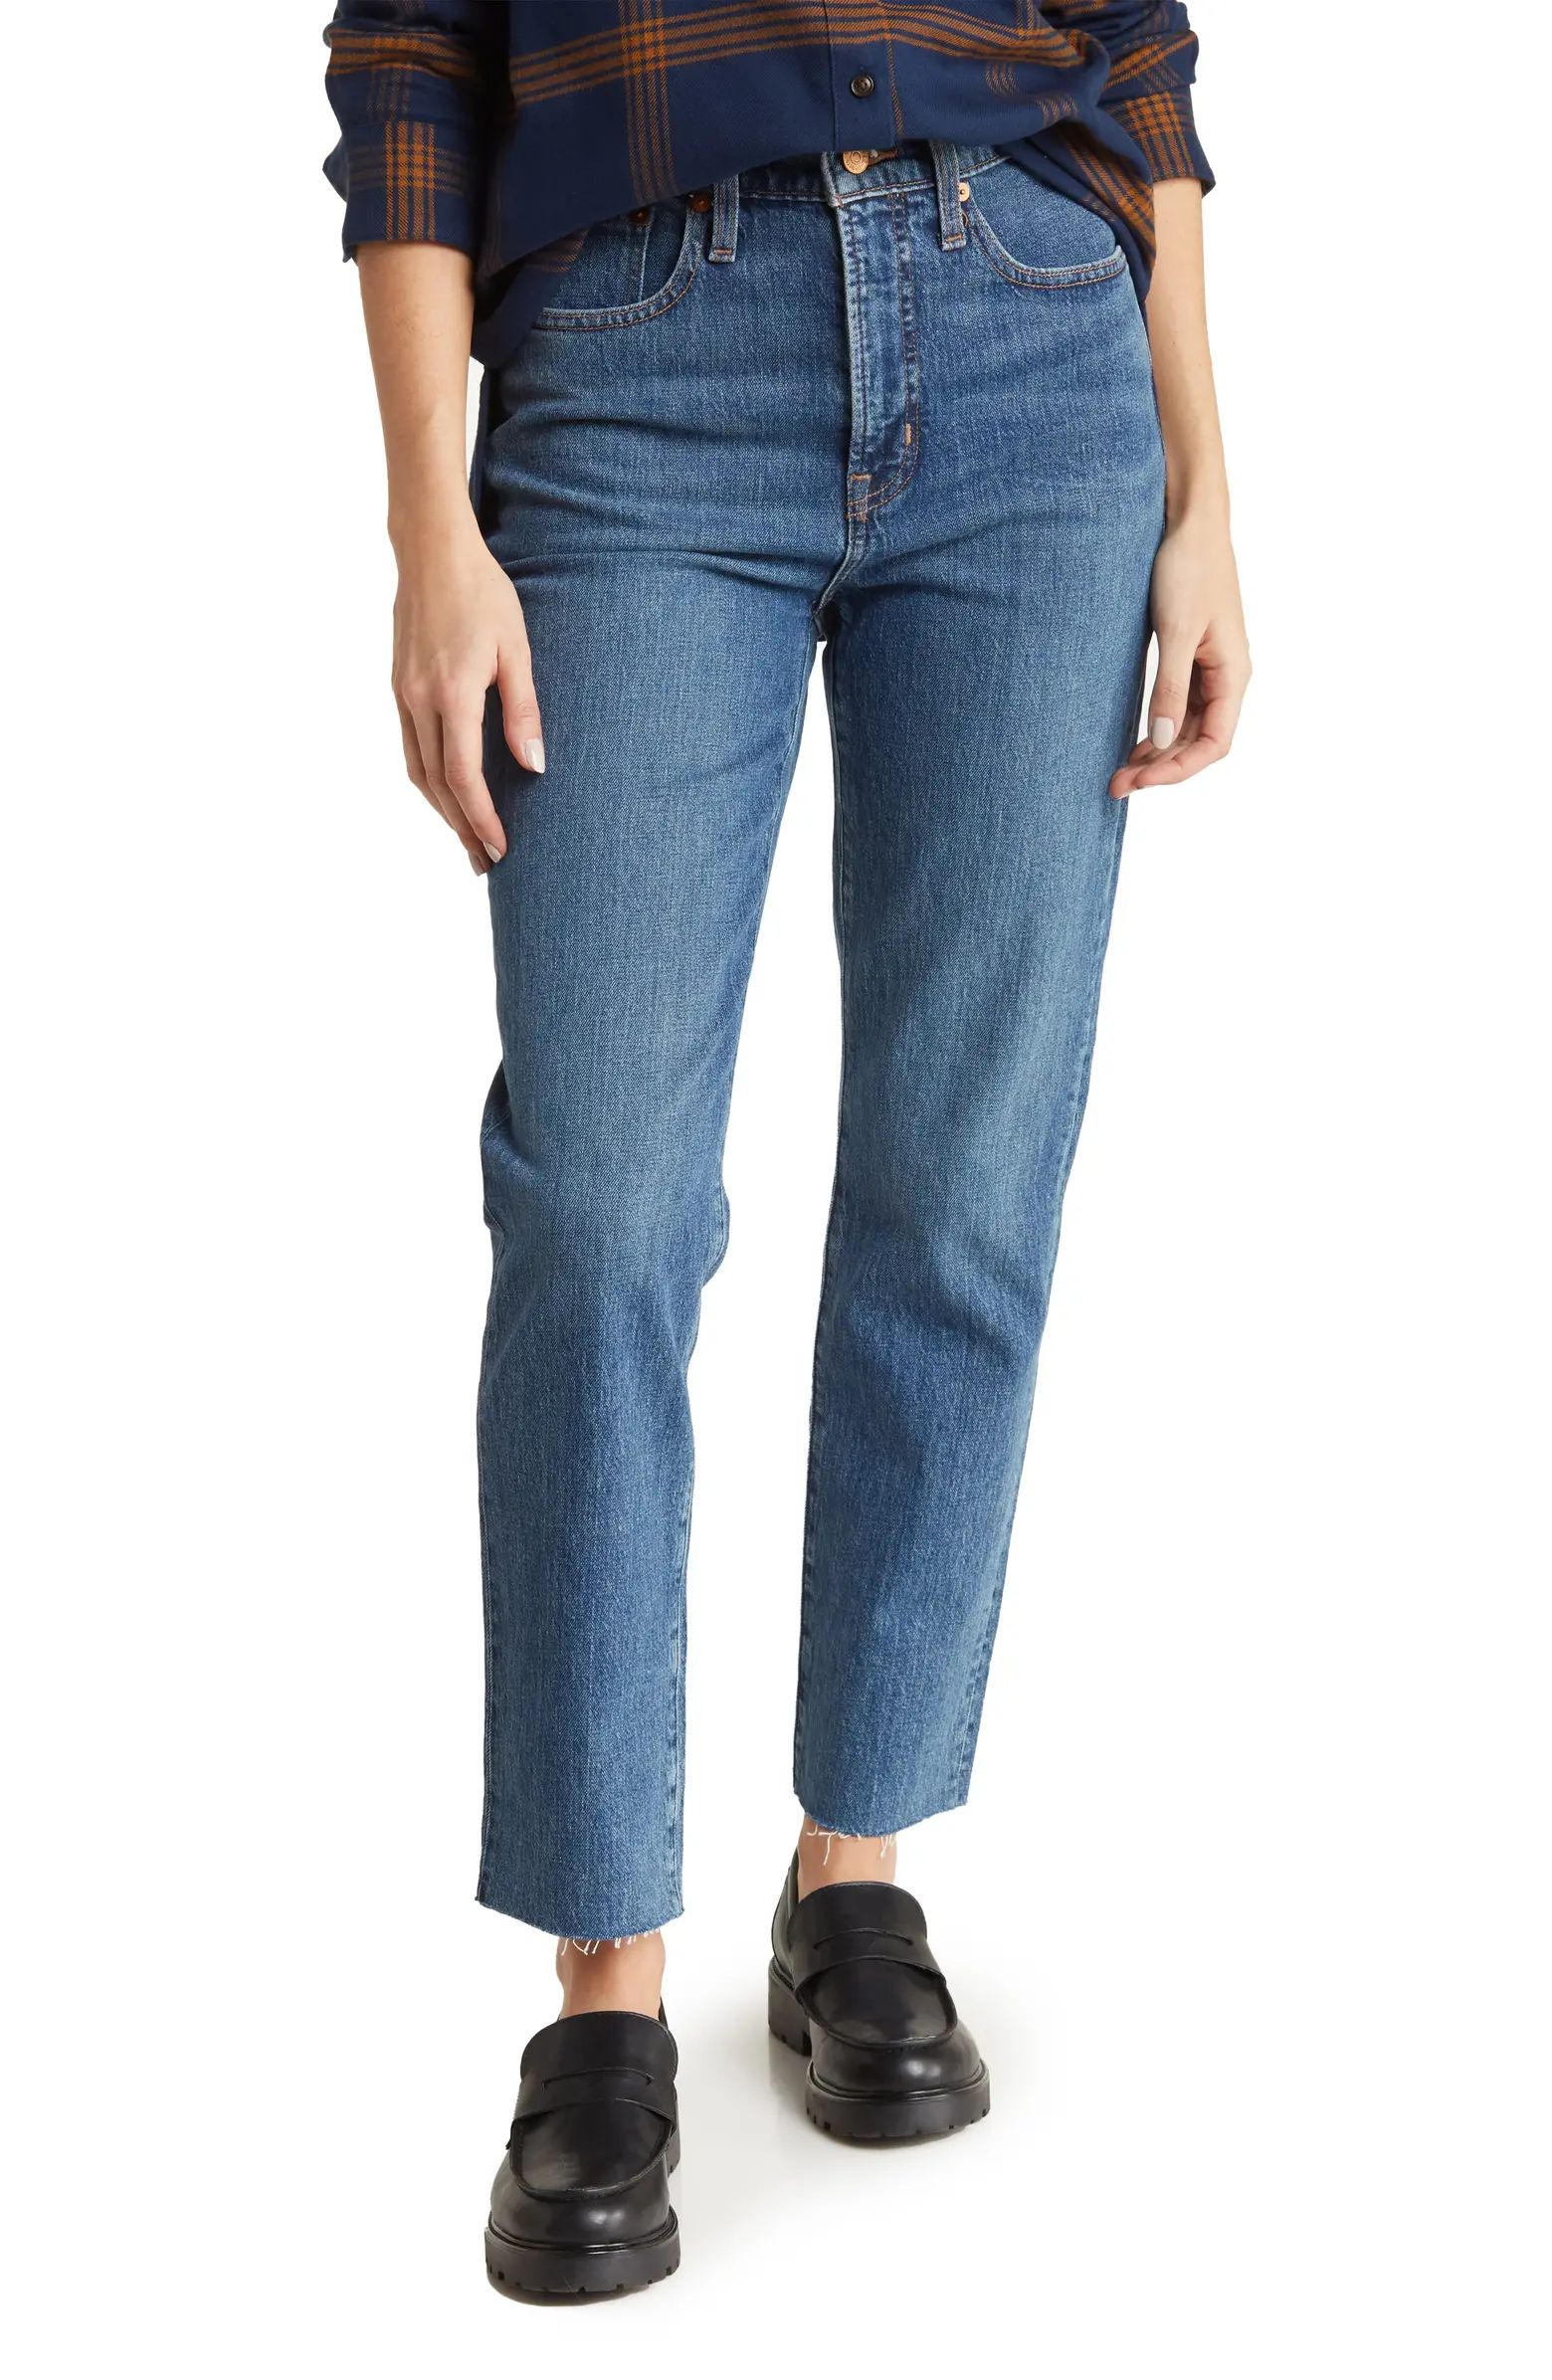 Madewell The Perfect Vintage Jeans in Alstyne Wash | Nordstromrack | Nordstrom Rack